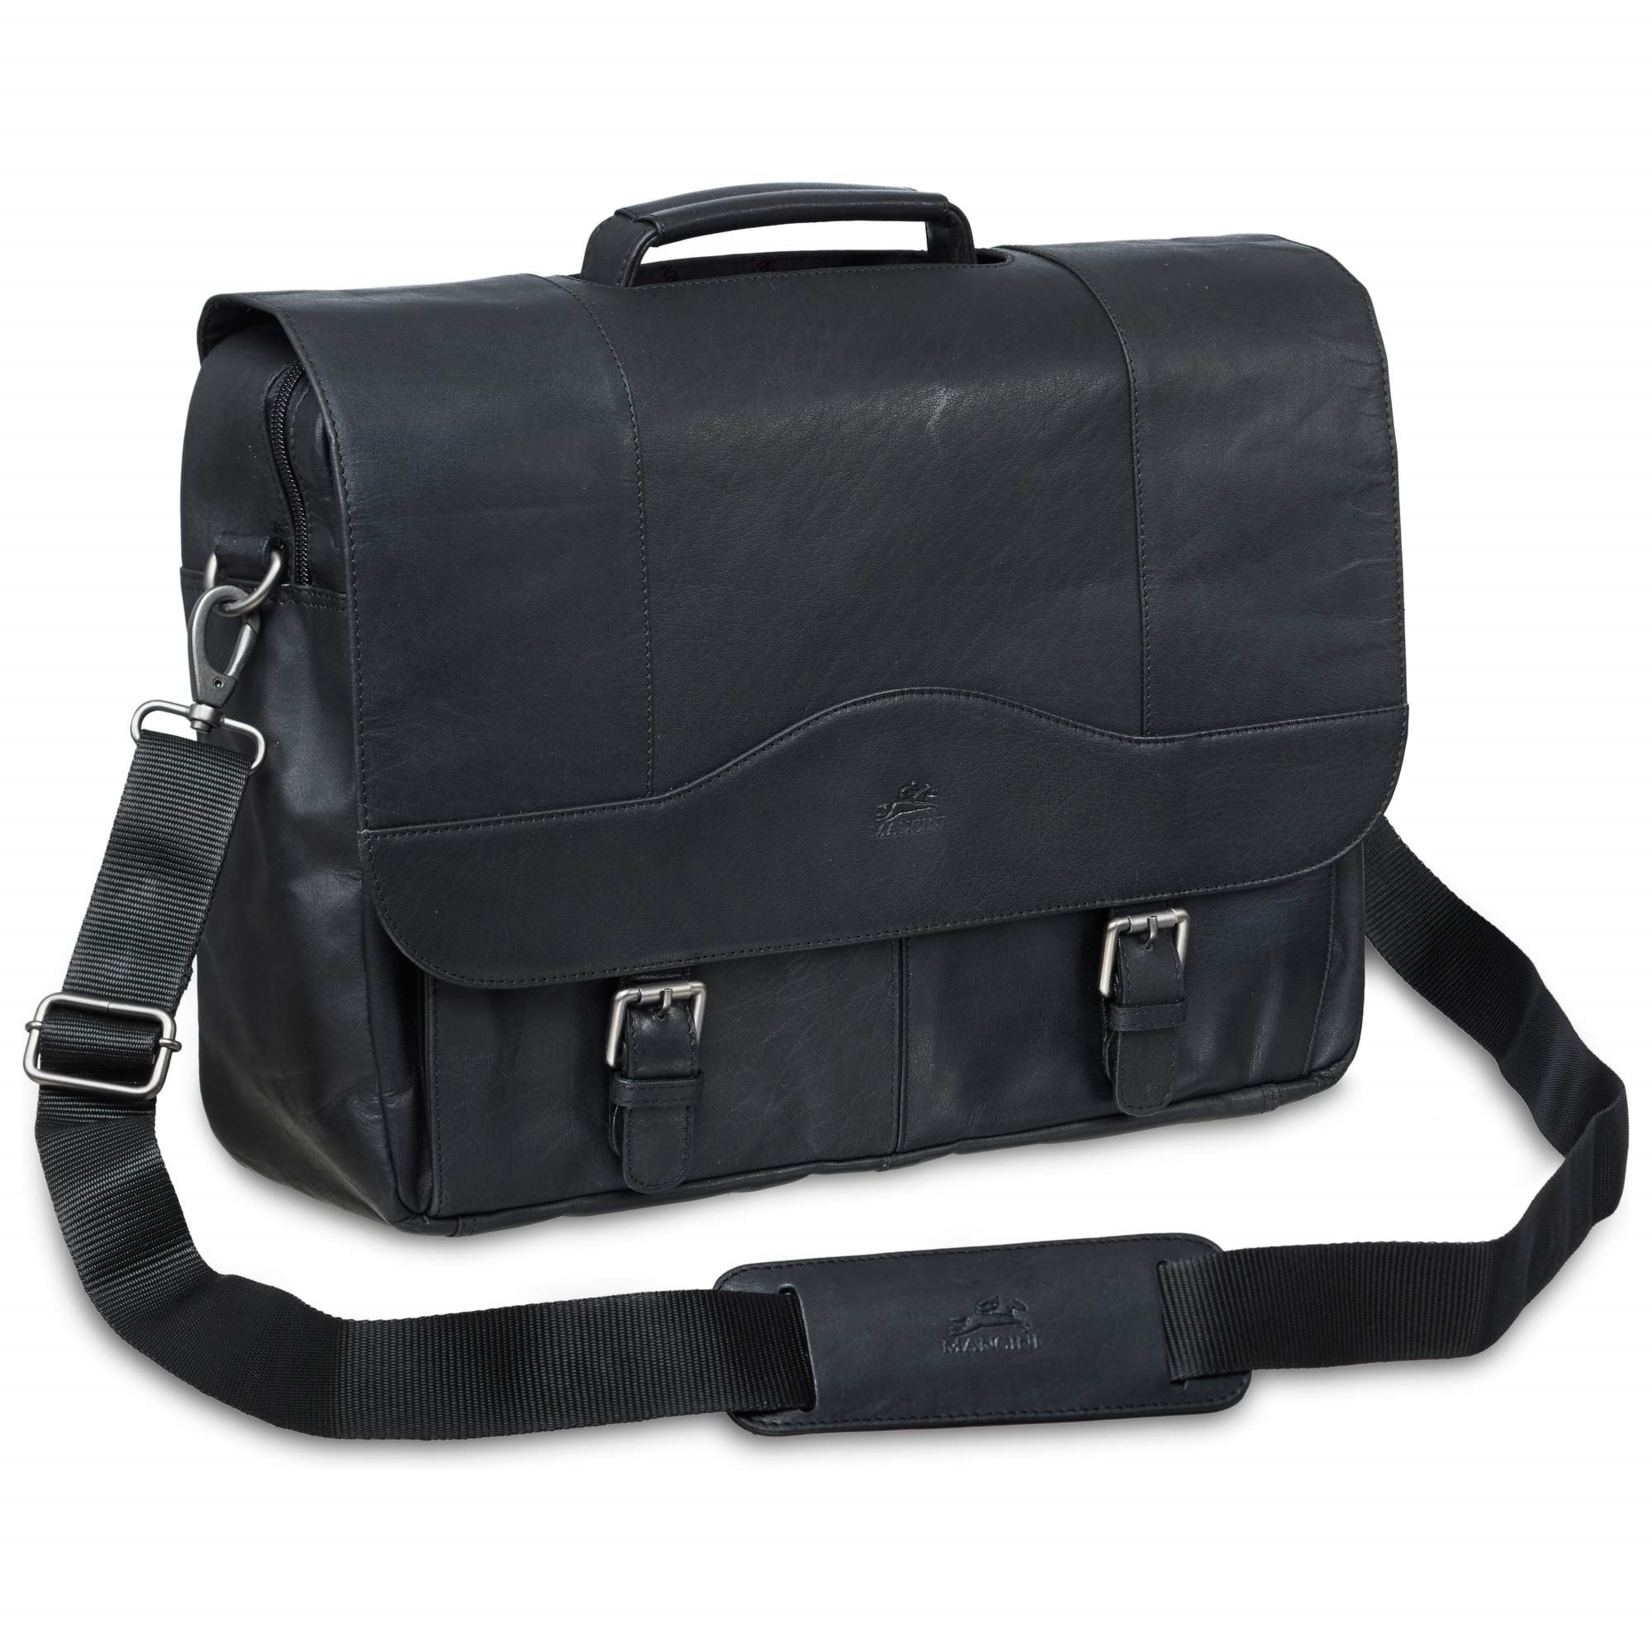 Mancini Porthole briefcase for 15.6” Laptop / Tablet